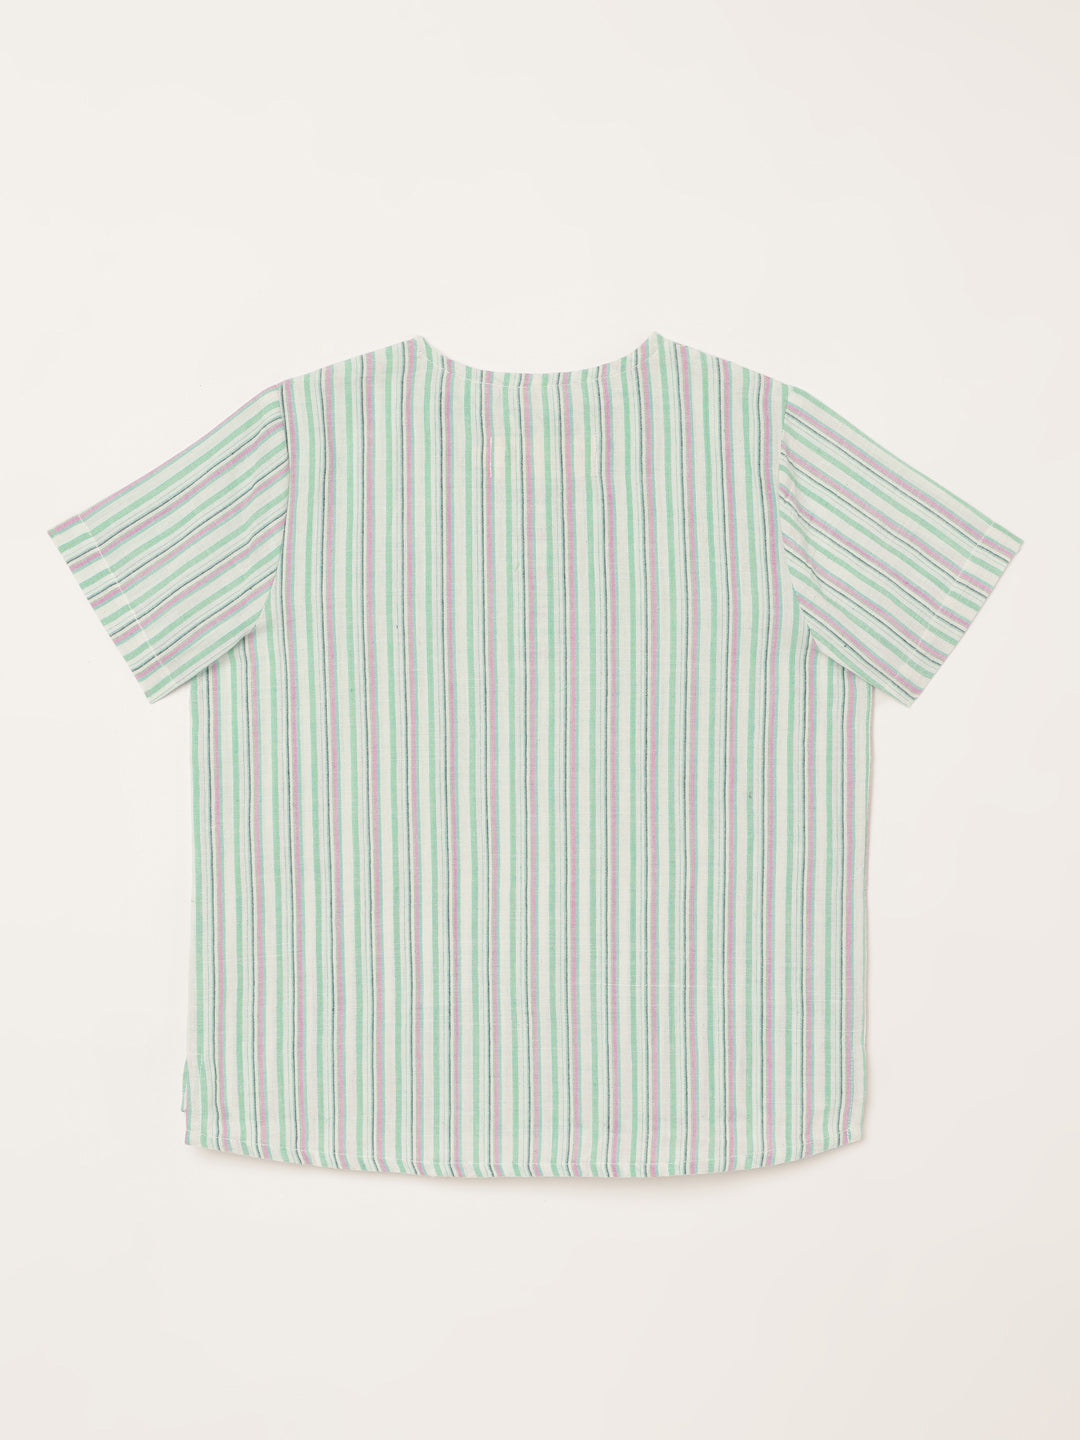 Boys Handloom Cotton Green Stripes Half Sleeves Shirt 1 yr to 8 yrs - Back